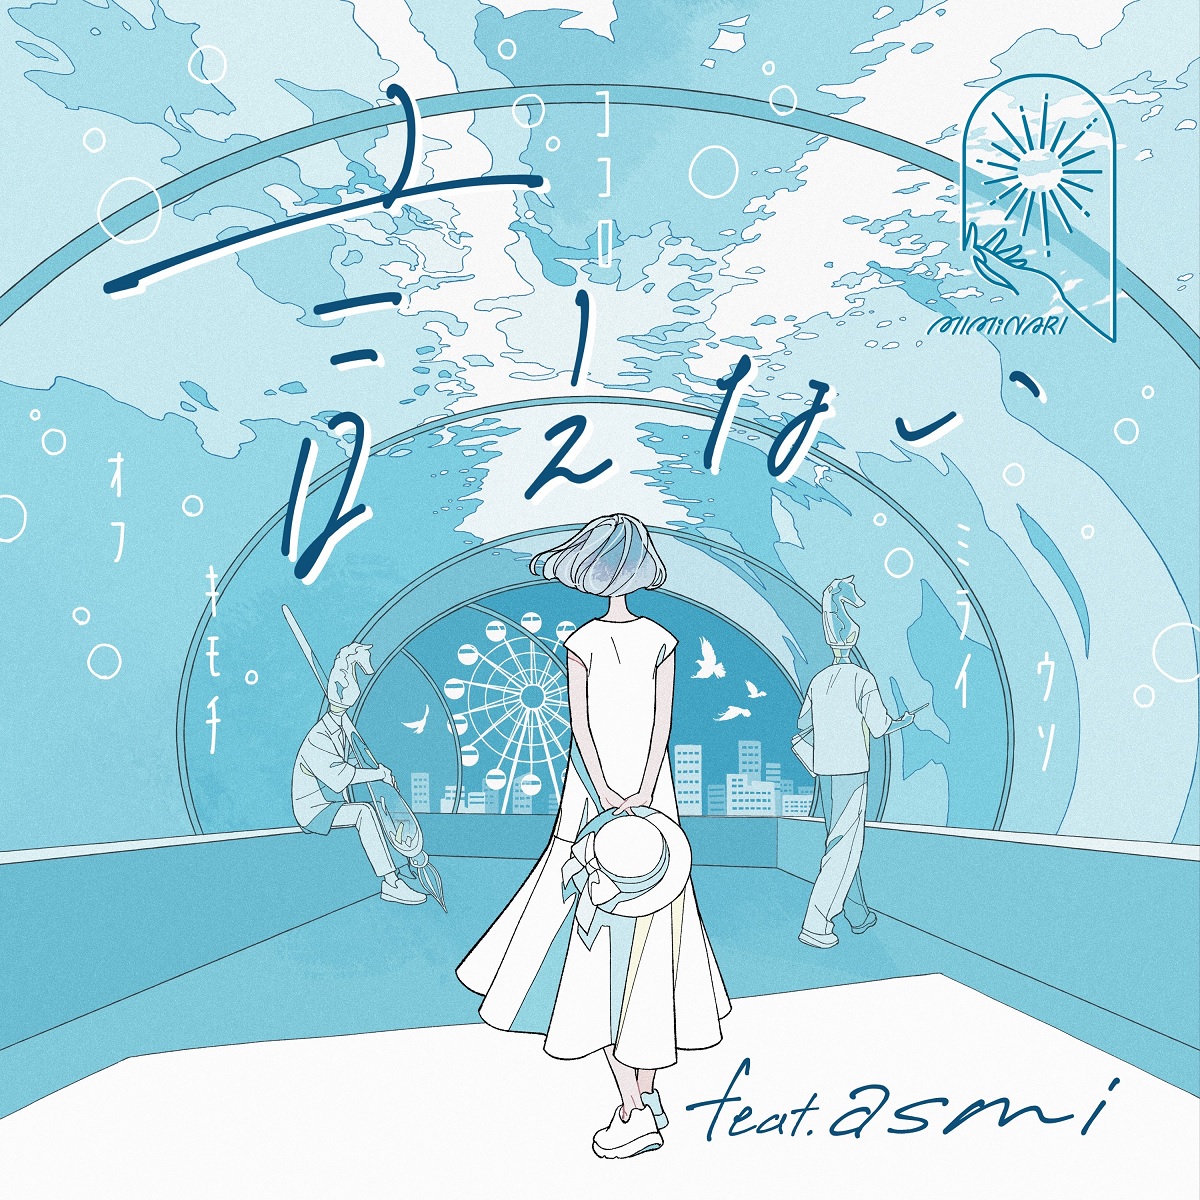 Cover art for『MIMiNARI - Mienai feat.natsumi』from the release『Ienai feat. asmi』